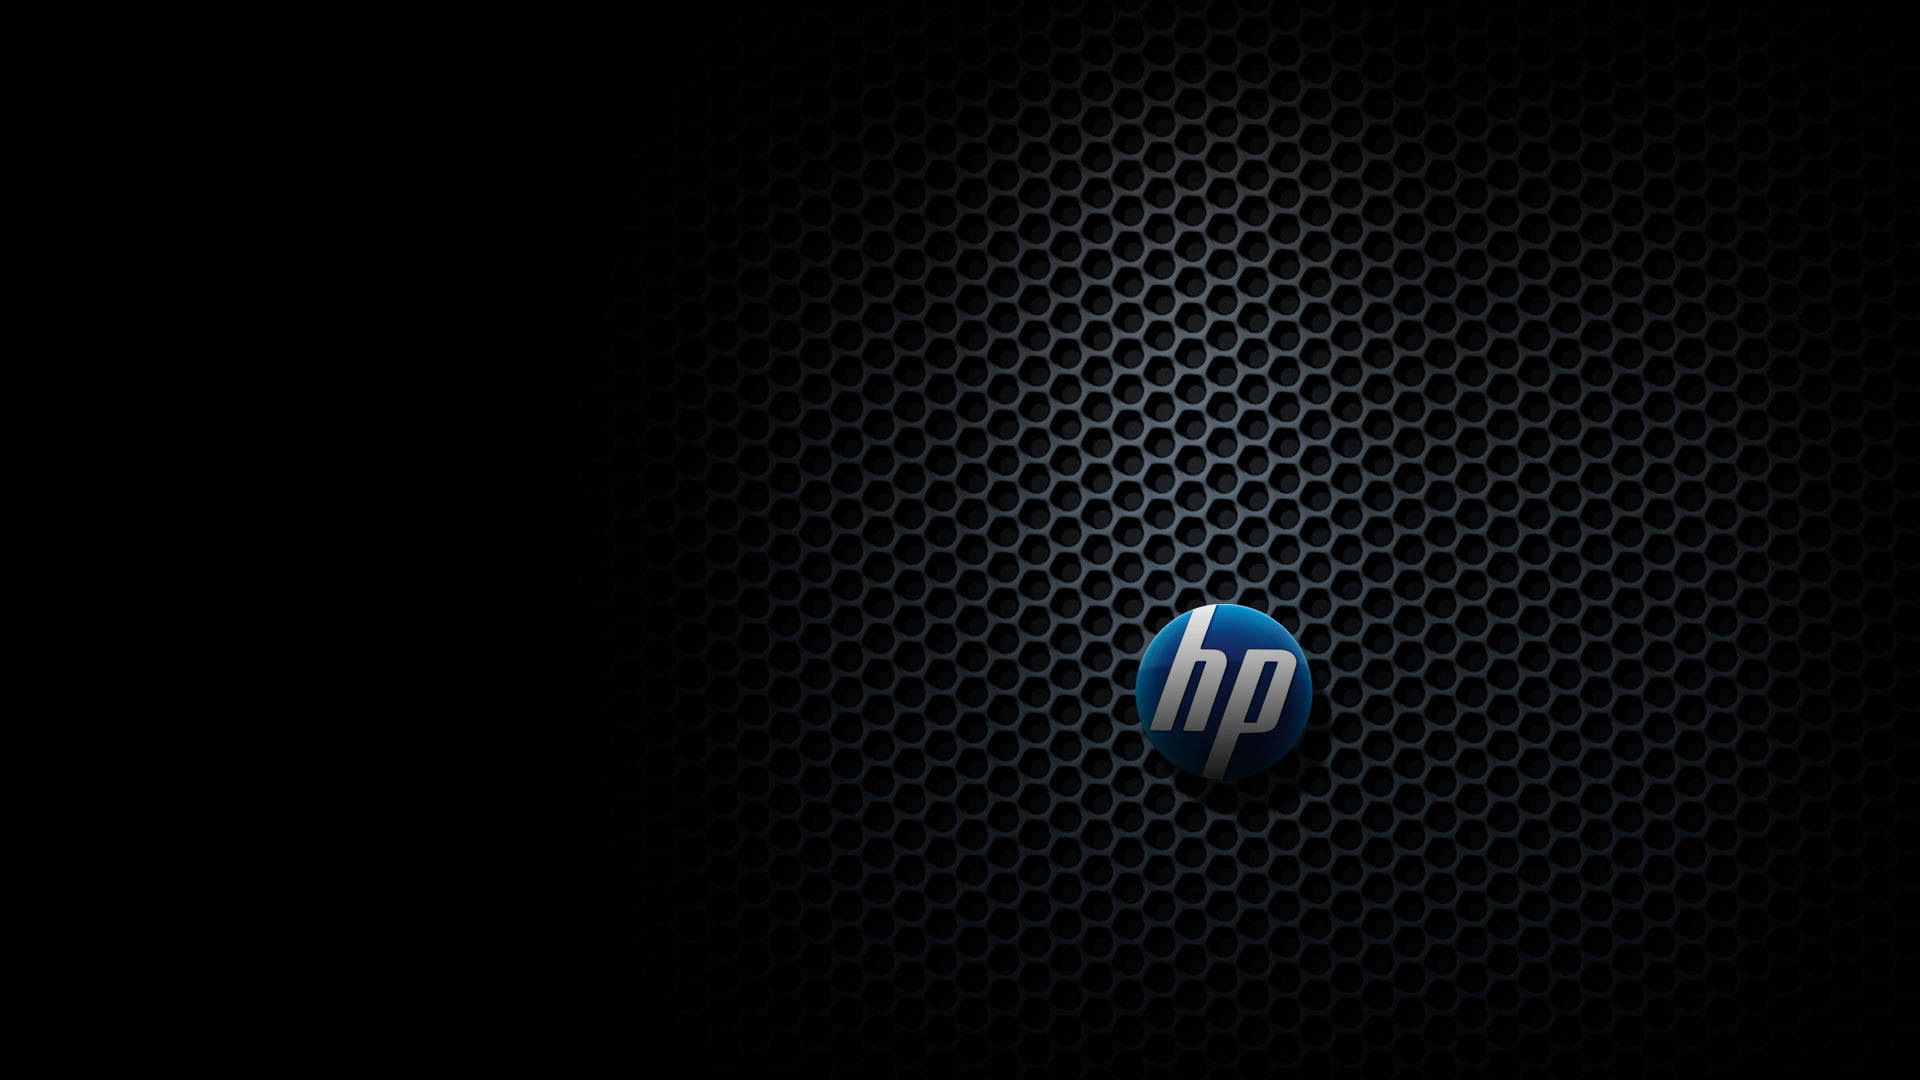 Iconic Hp Laptop Logo